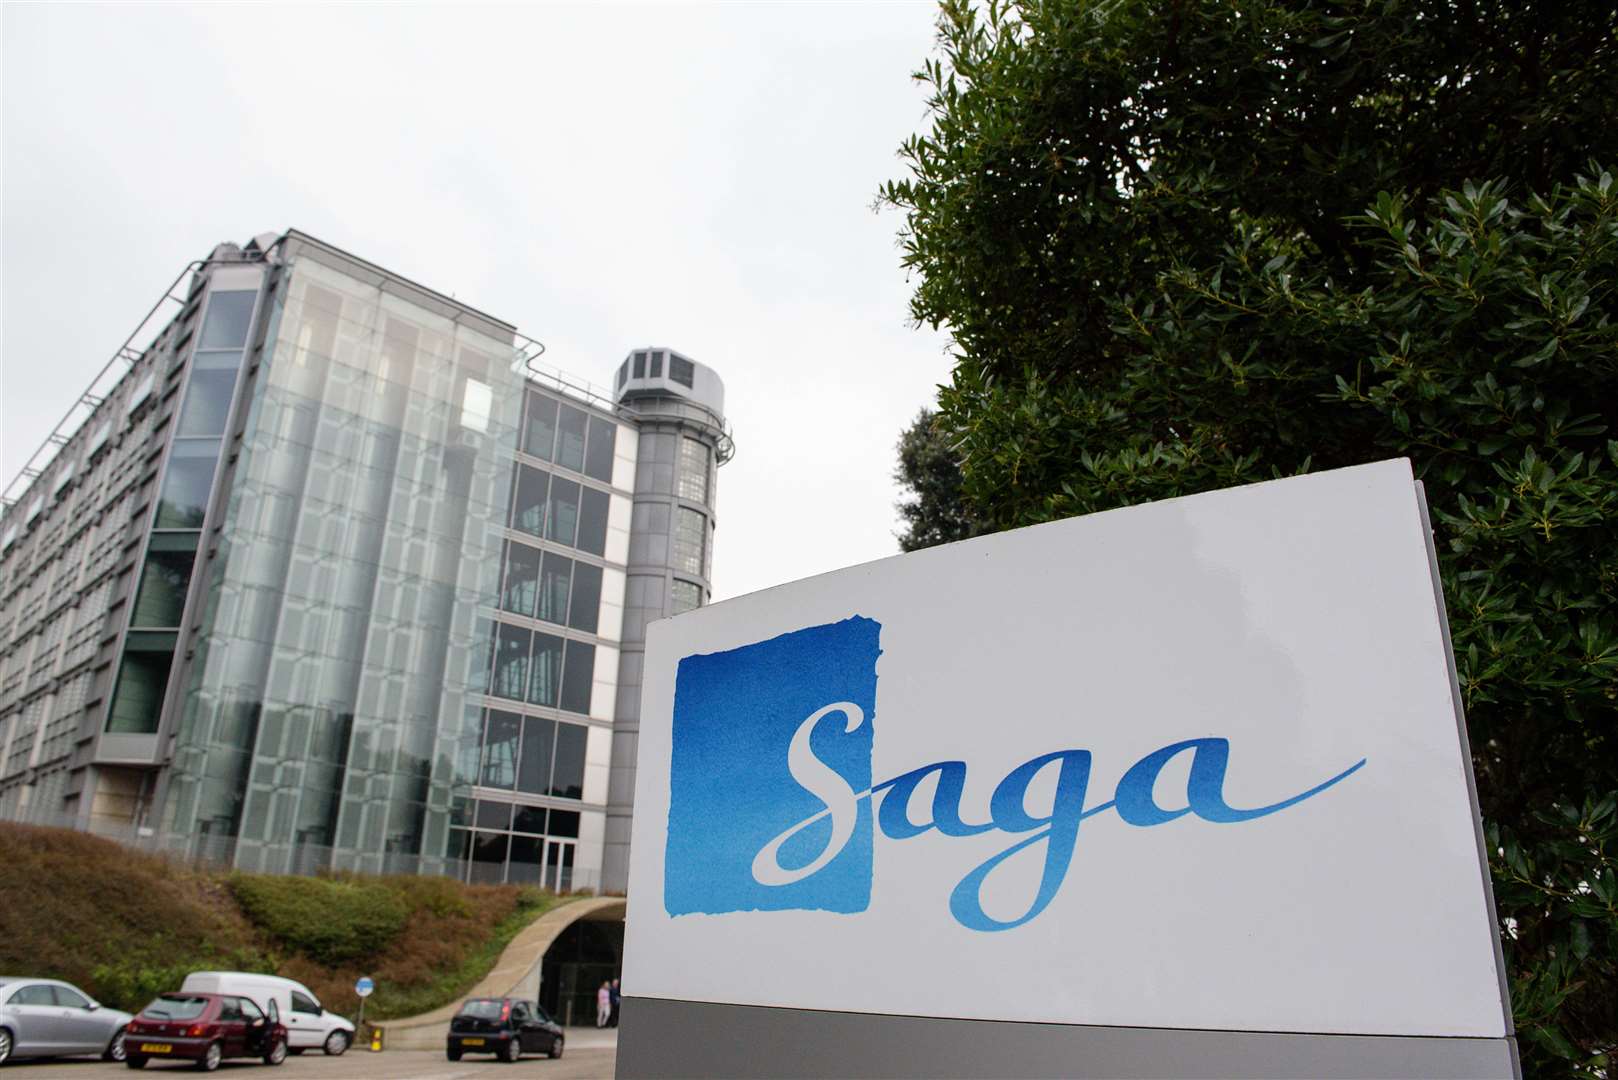 Saga, based in Sandgate, near Folkestone, is offering staff a week's leave to welcome their grandchildren